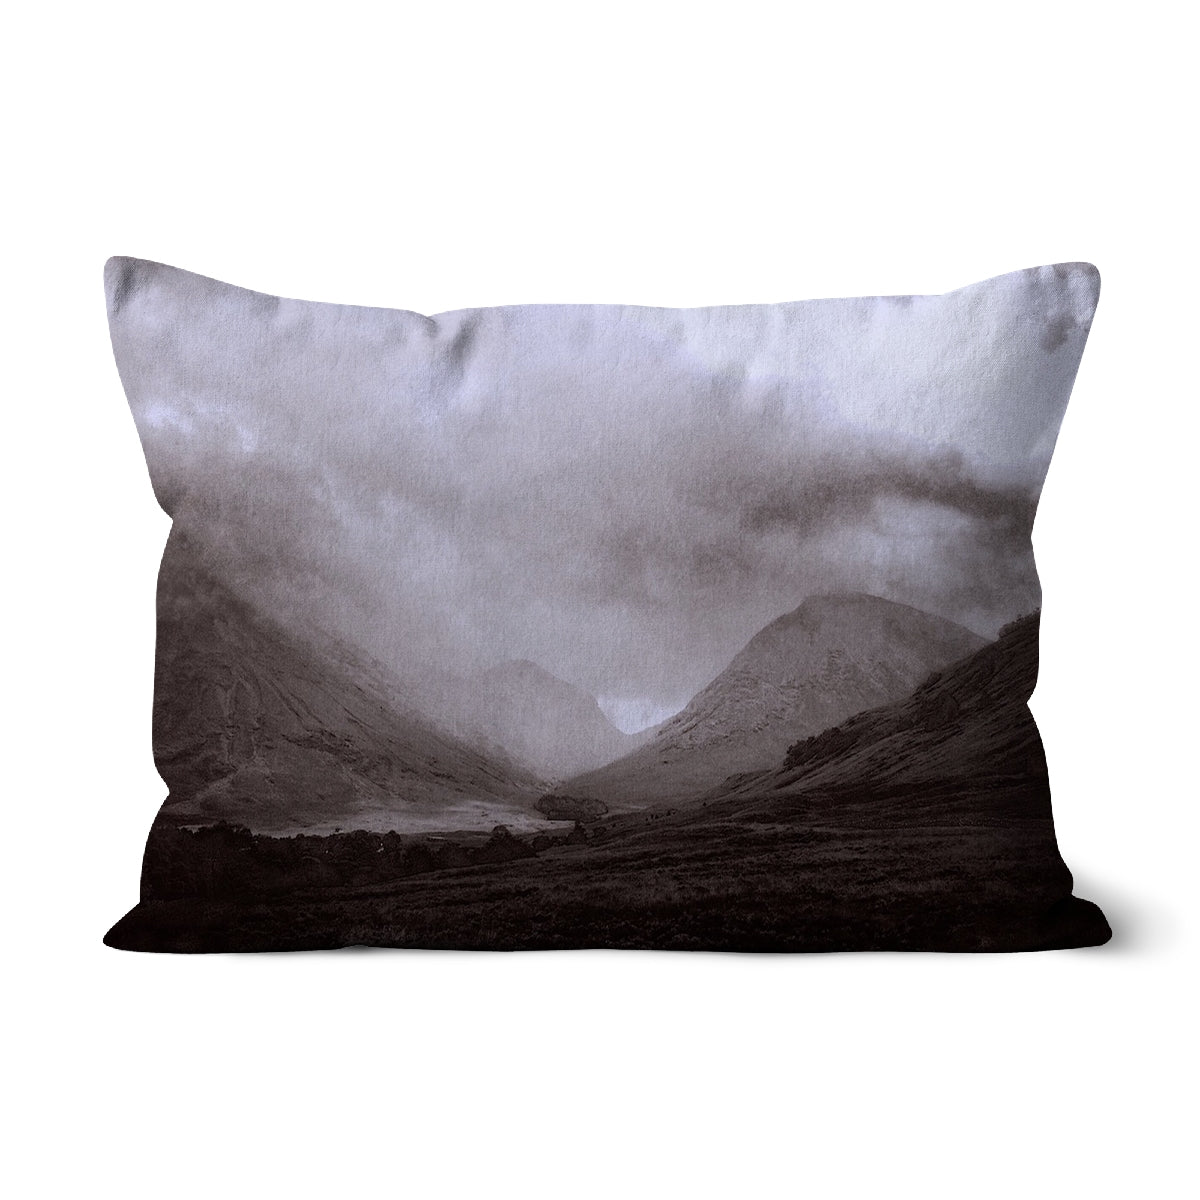 Glencoe Mist Art Gifts Cushion-Cushions-Glencoe Art Gallery-Canvas-19"x13"-Paintings, Prints, Homeware, Art Gifts From Scotland By Scottish Artist Kevin Hunter